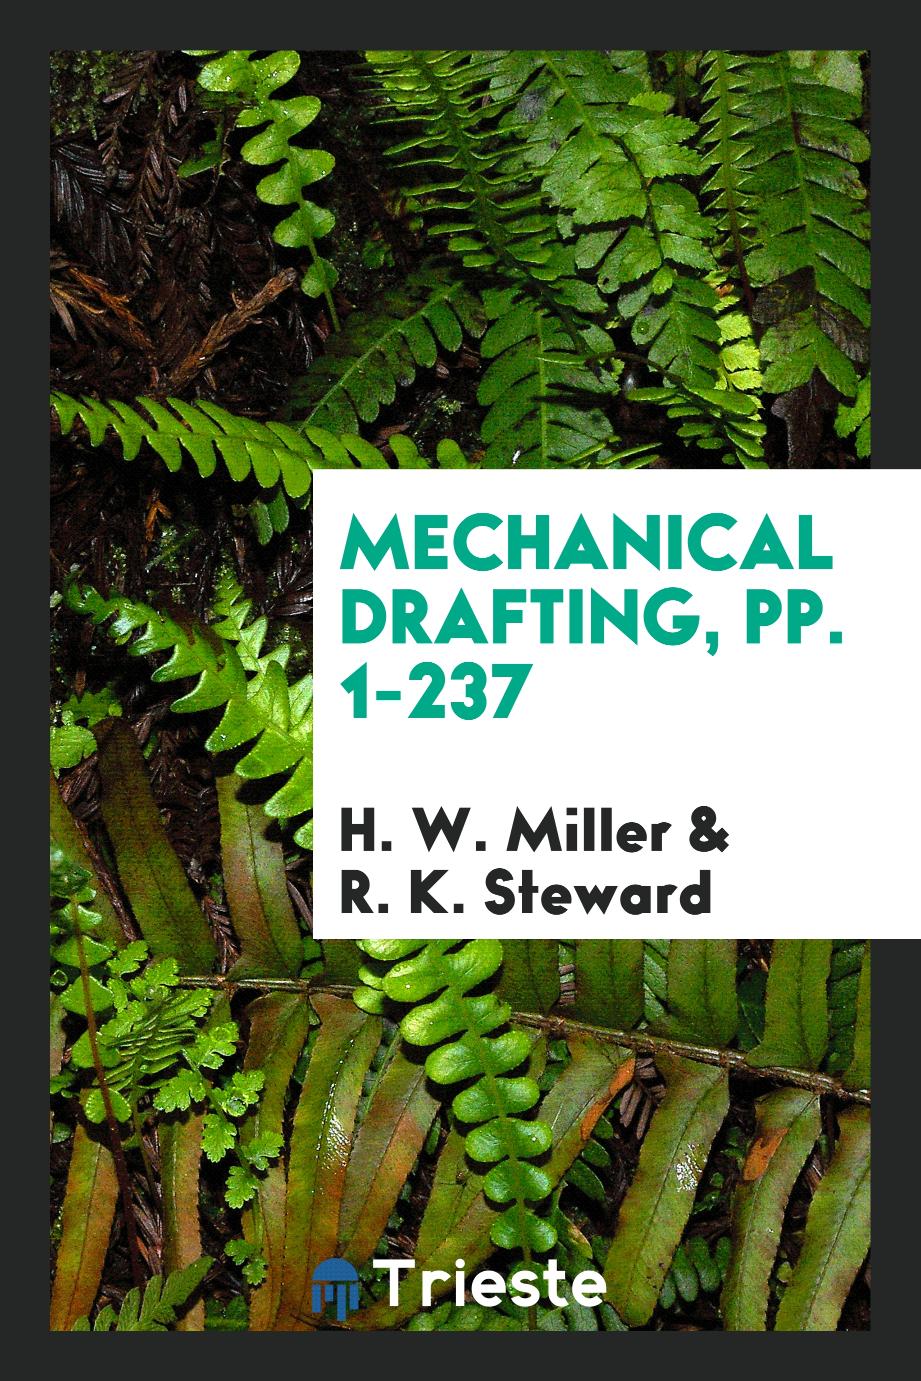 Mechanical Drafting, pp. 1-237